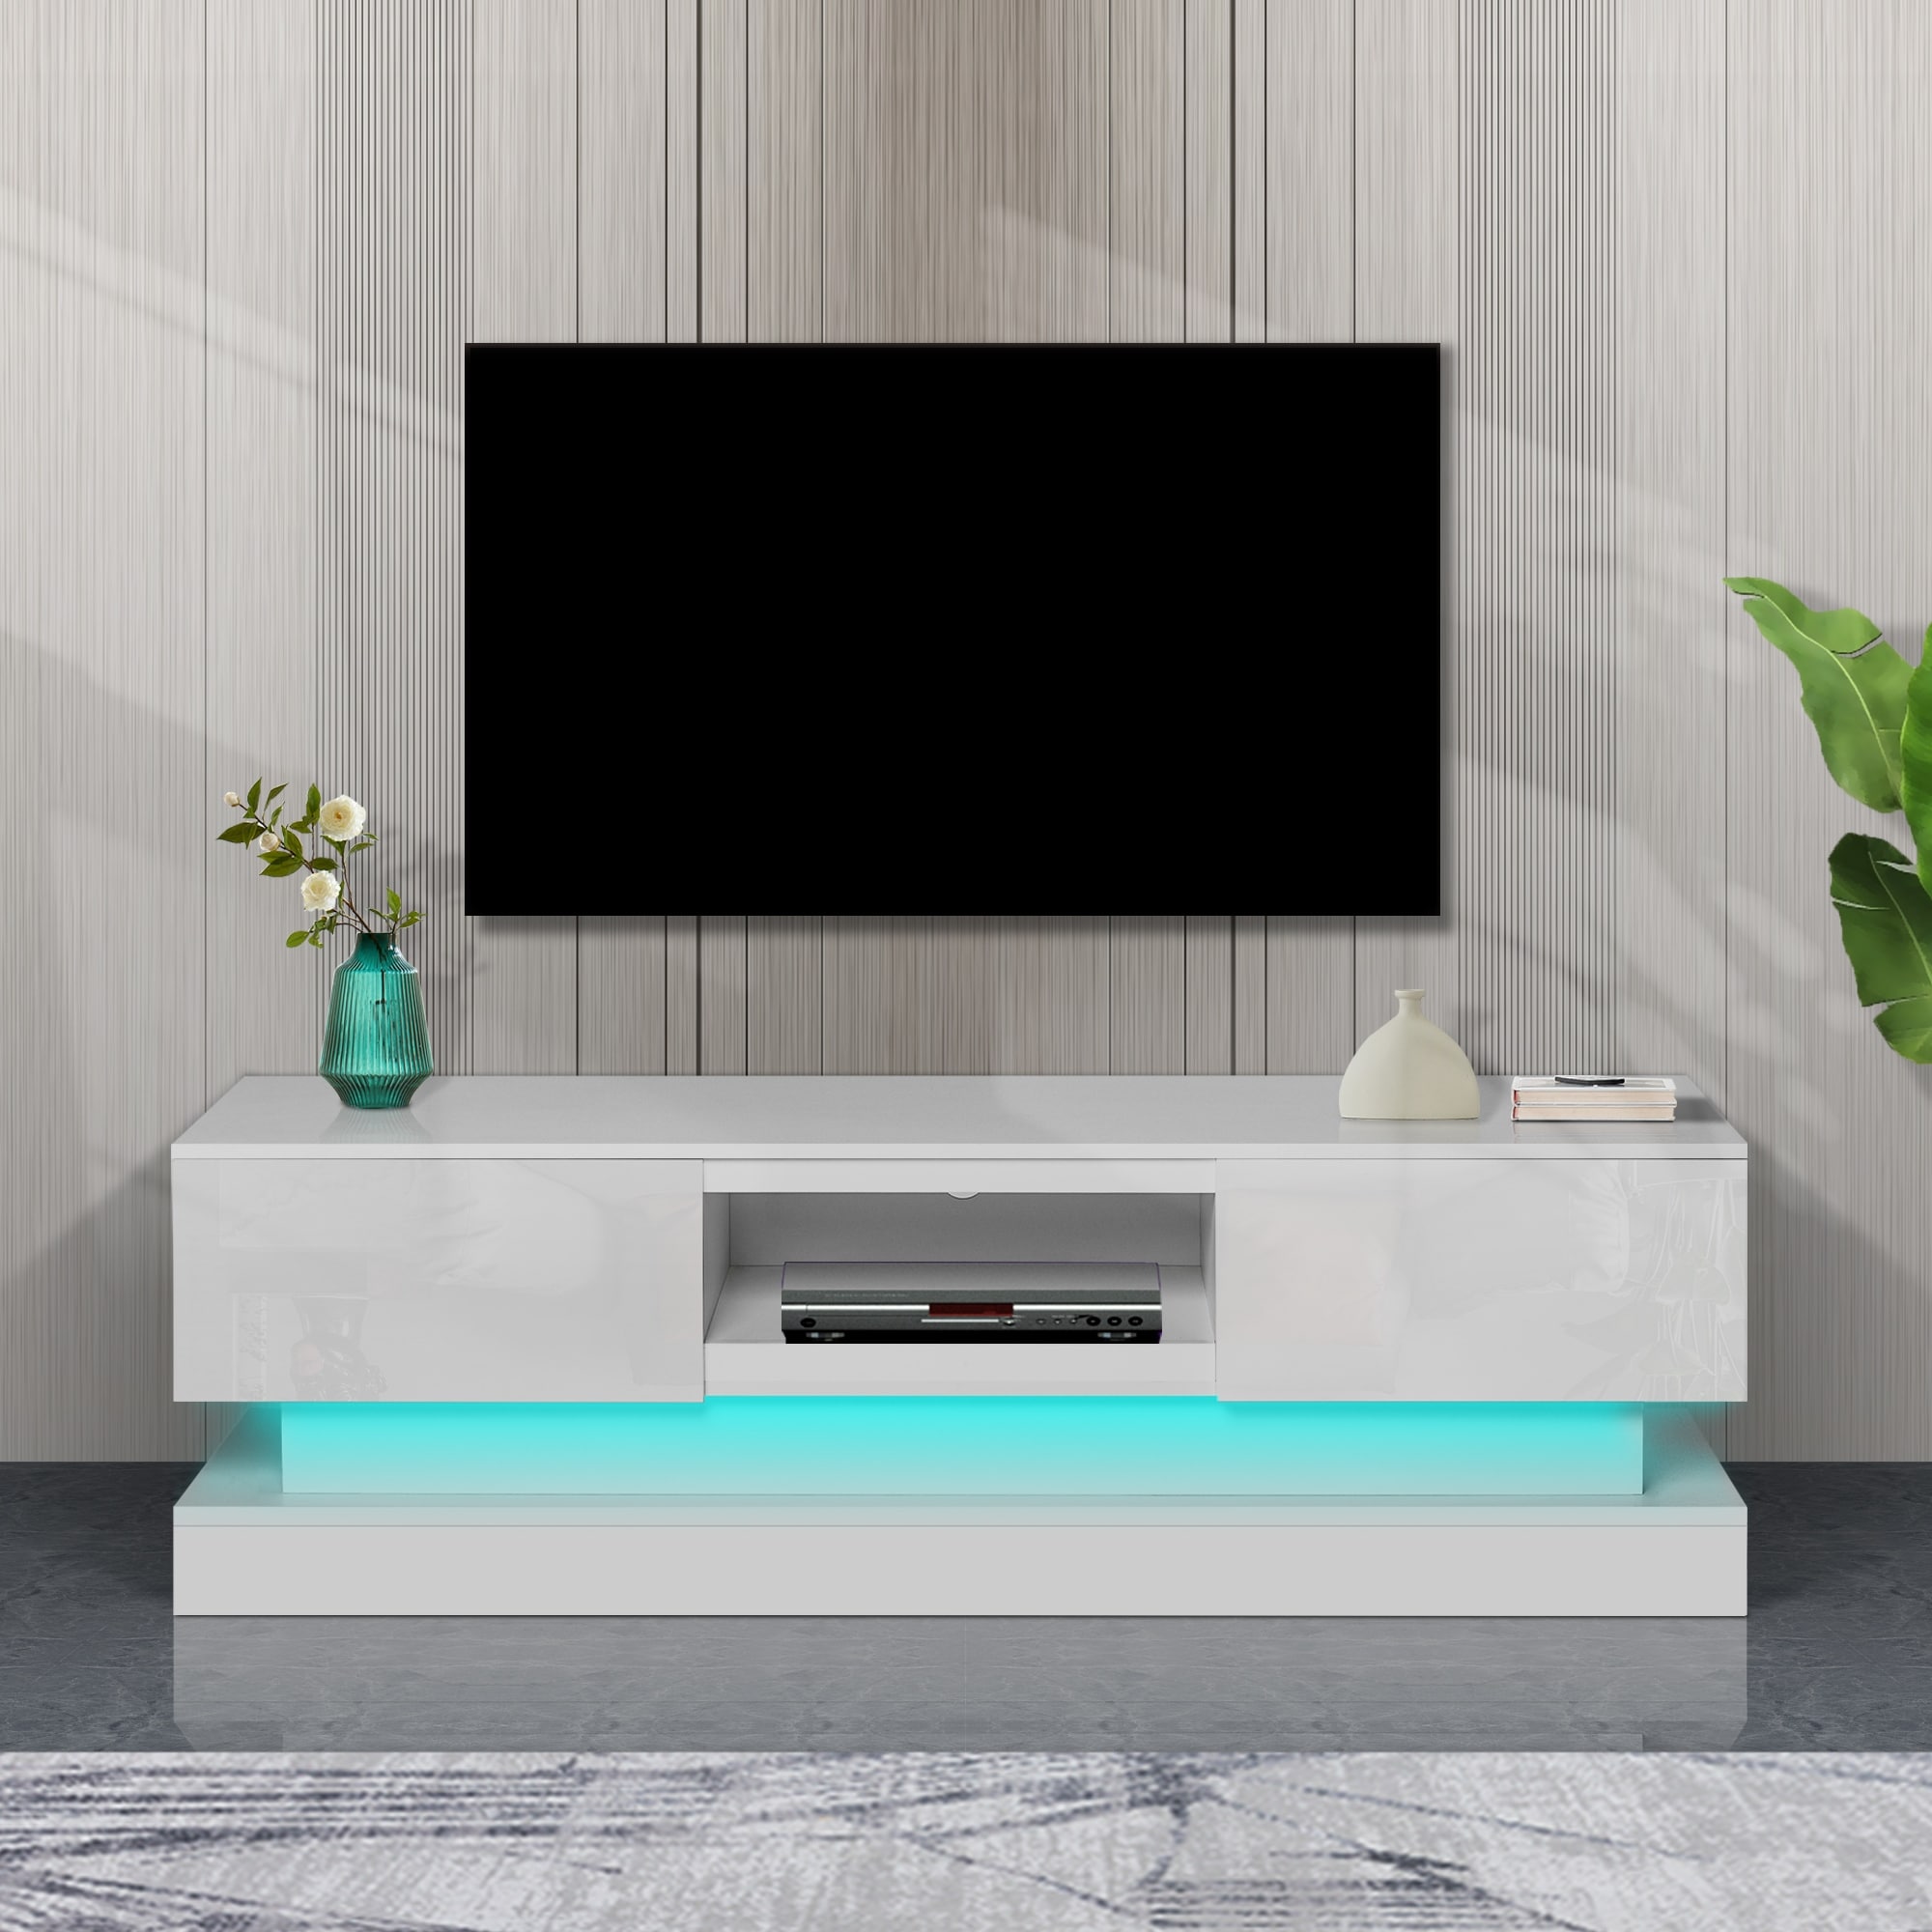 Elegant Household Decoration LED TV Cabinet with Single Drawer - On Sale -  Bed Bath & Beyond - 32500337